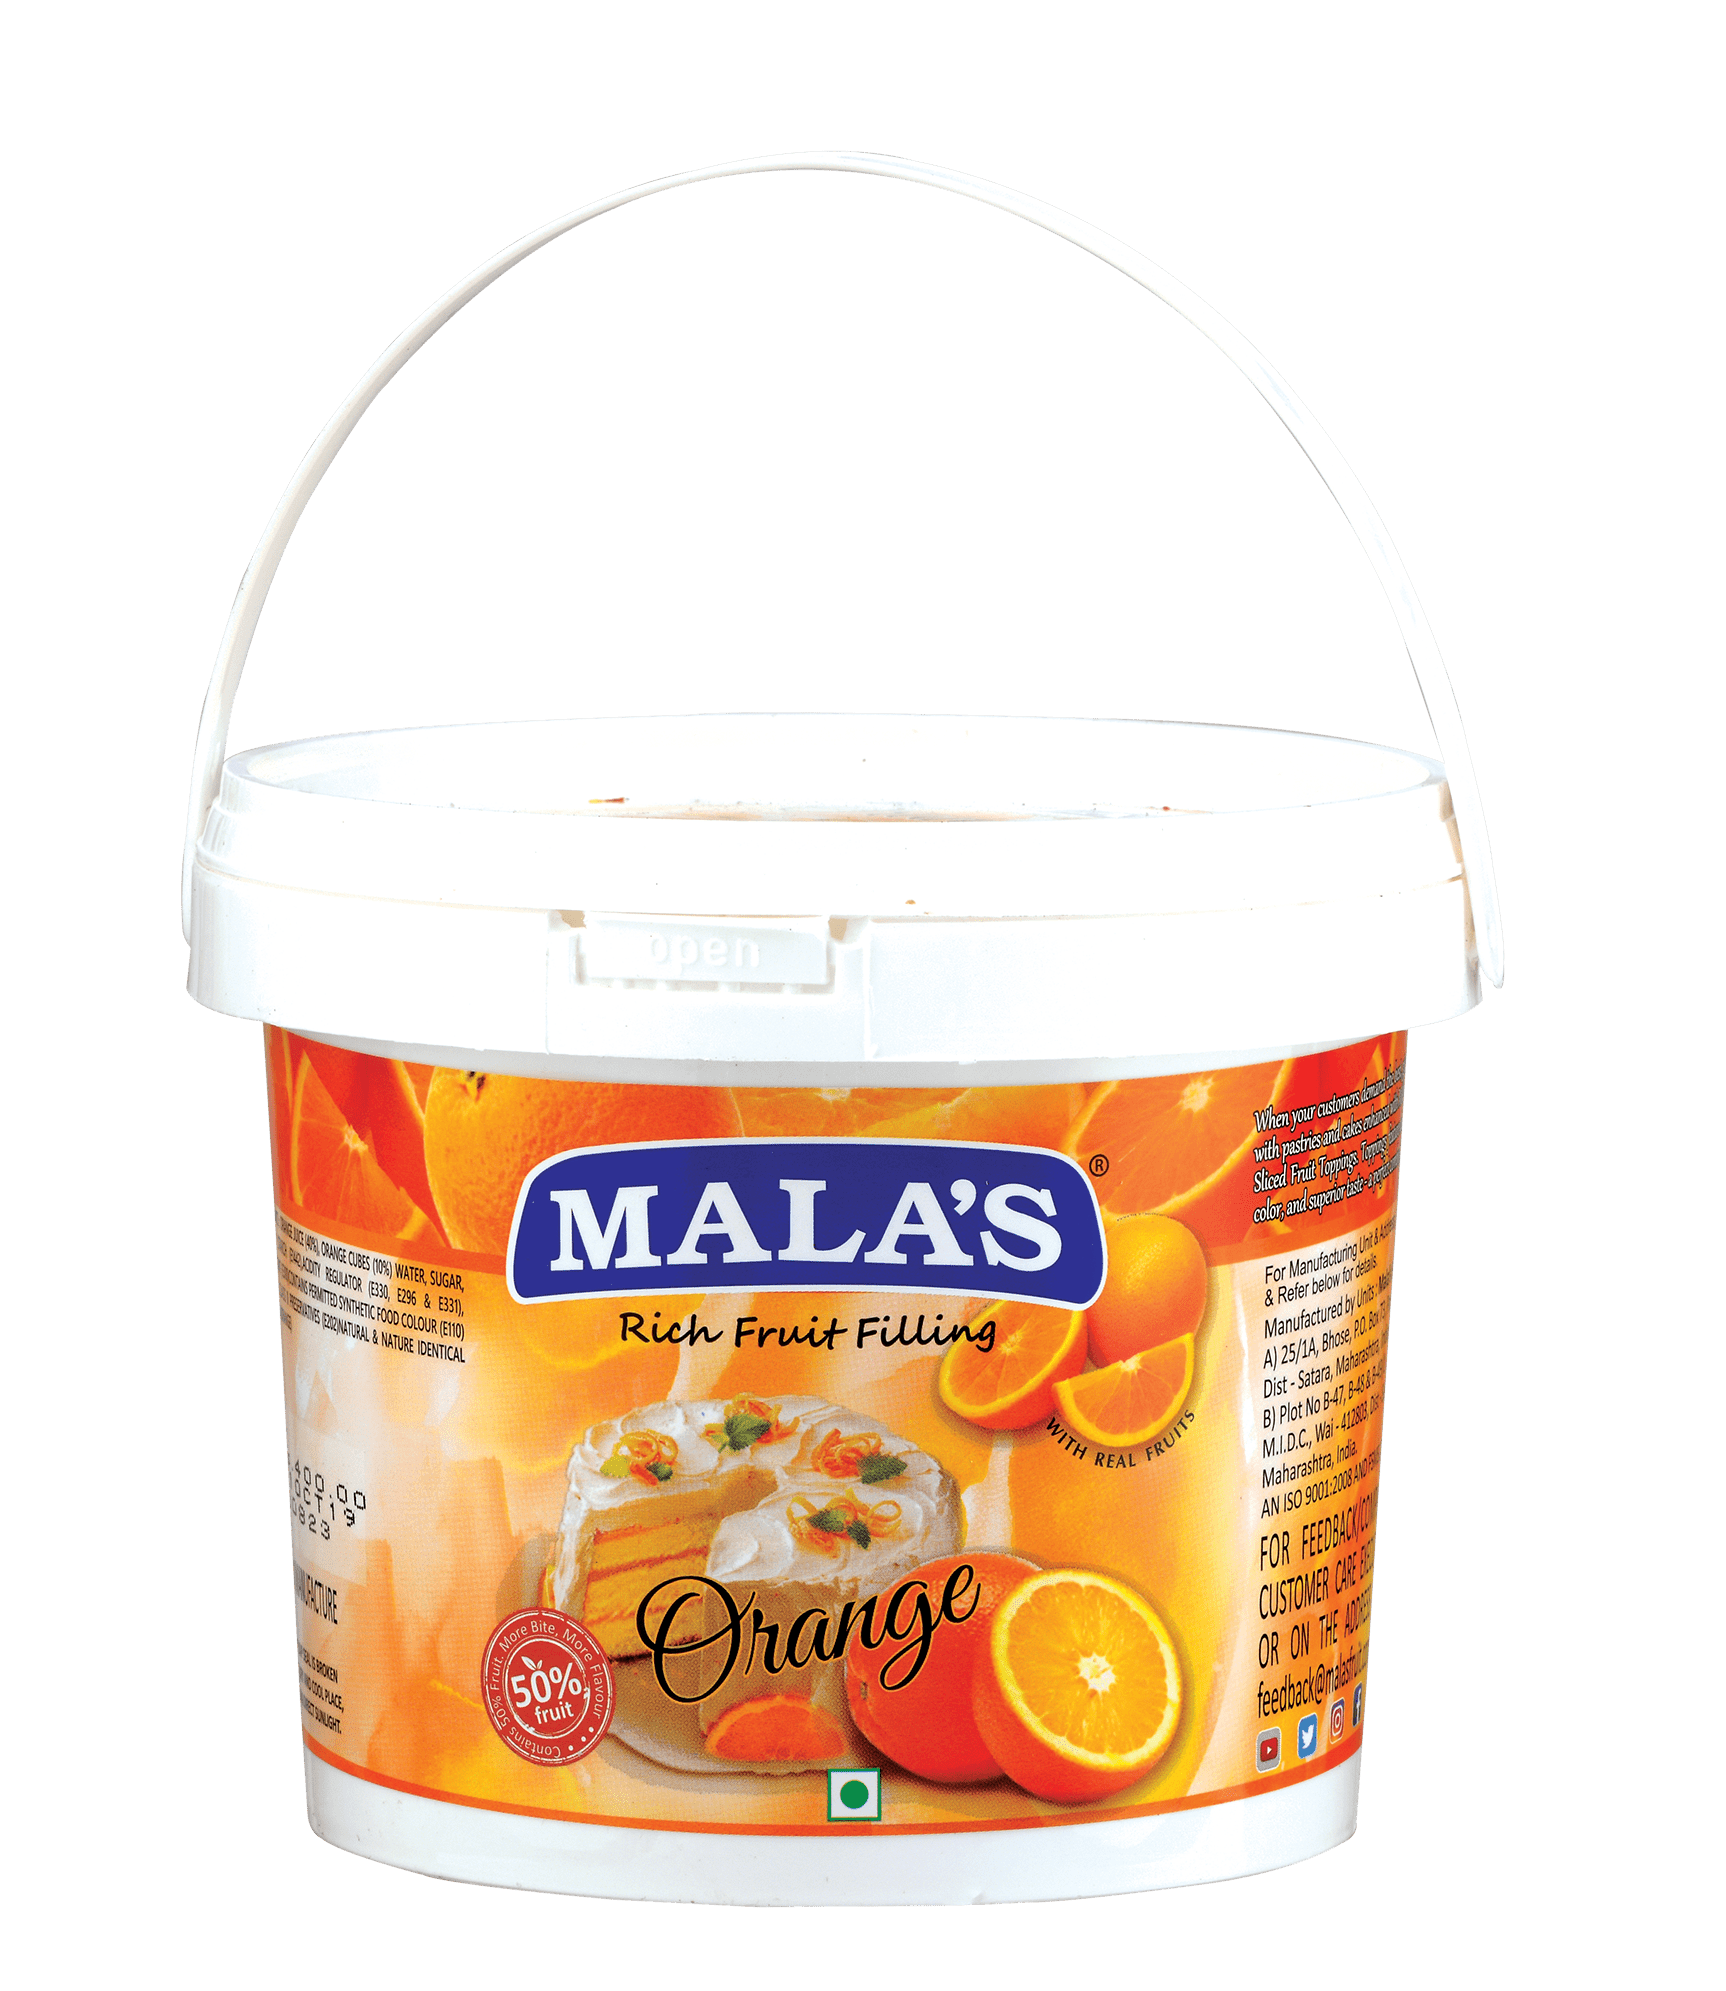 Mala's Orange Fillings for Pie , Pastry & Cake FILLINGS Mala's